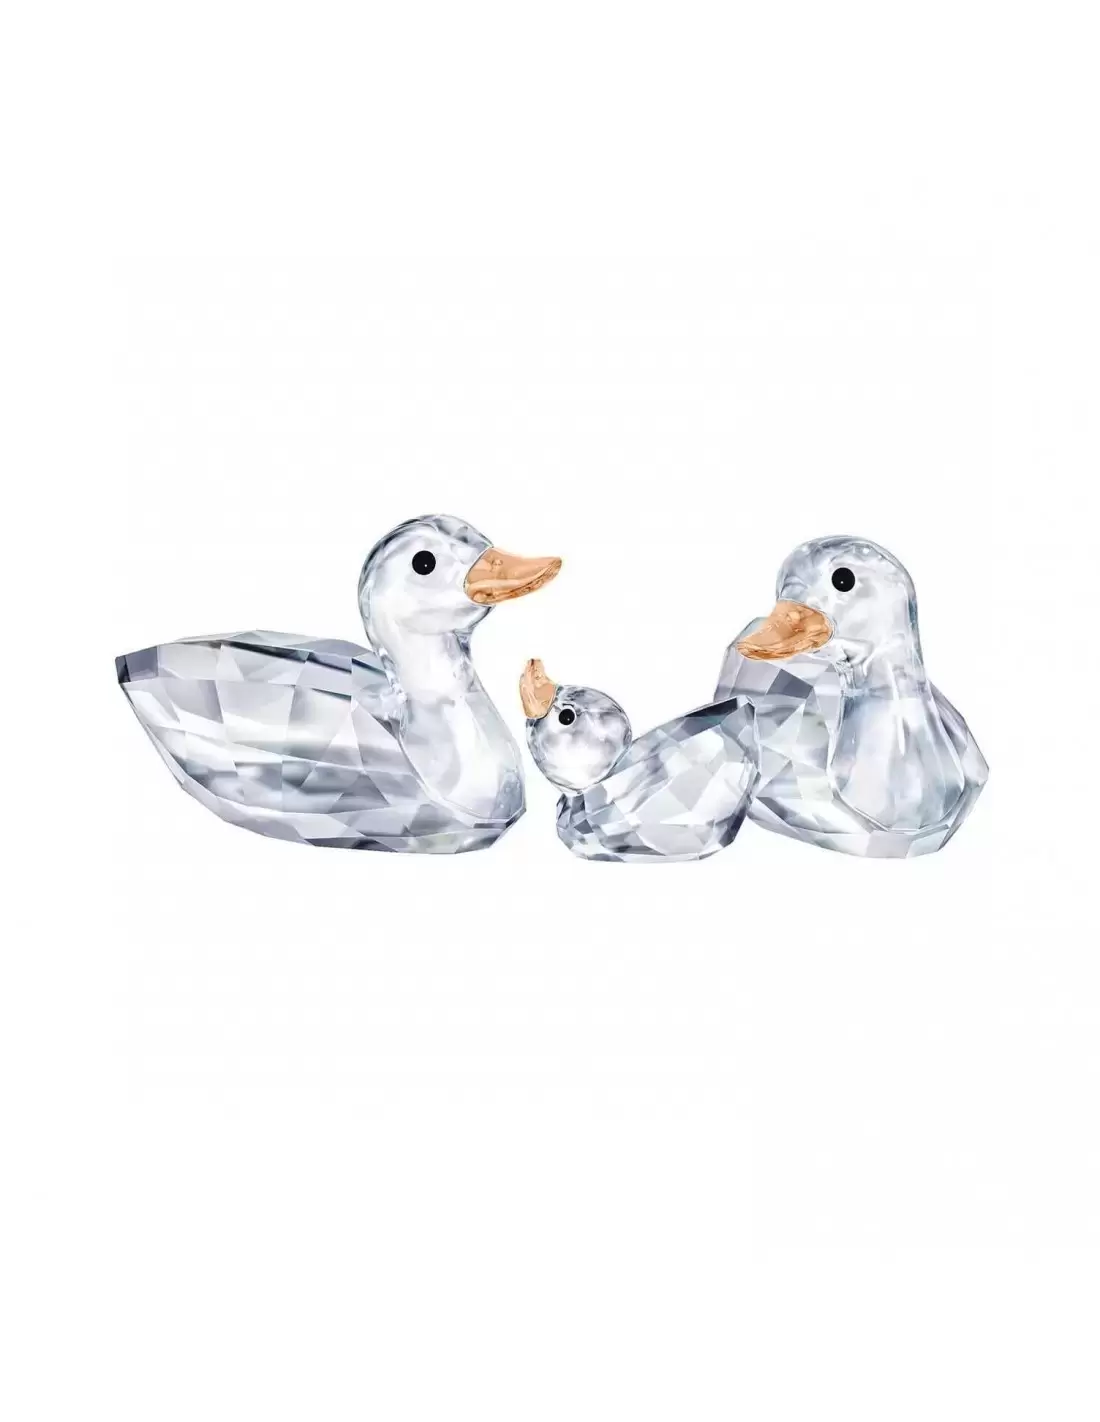 Swarovski Crystal Figures - Ducks with his Family